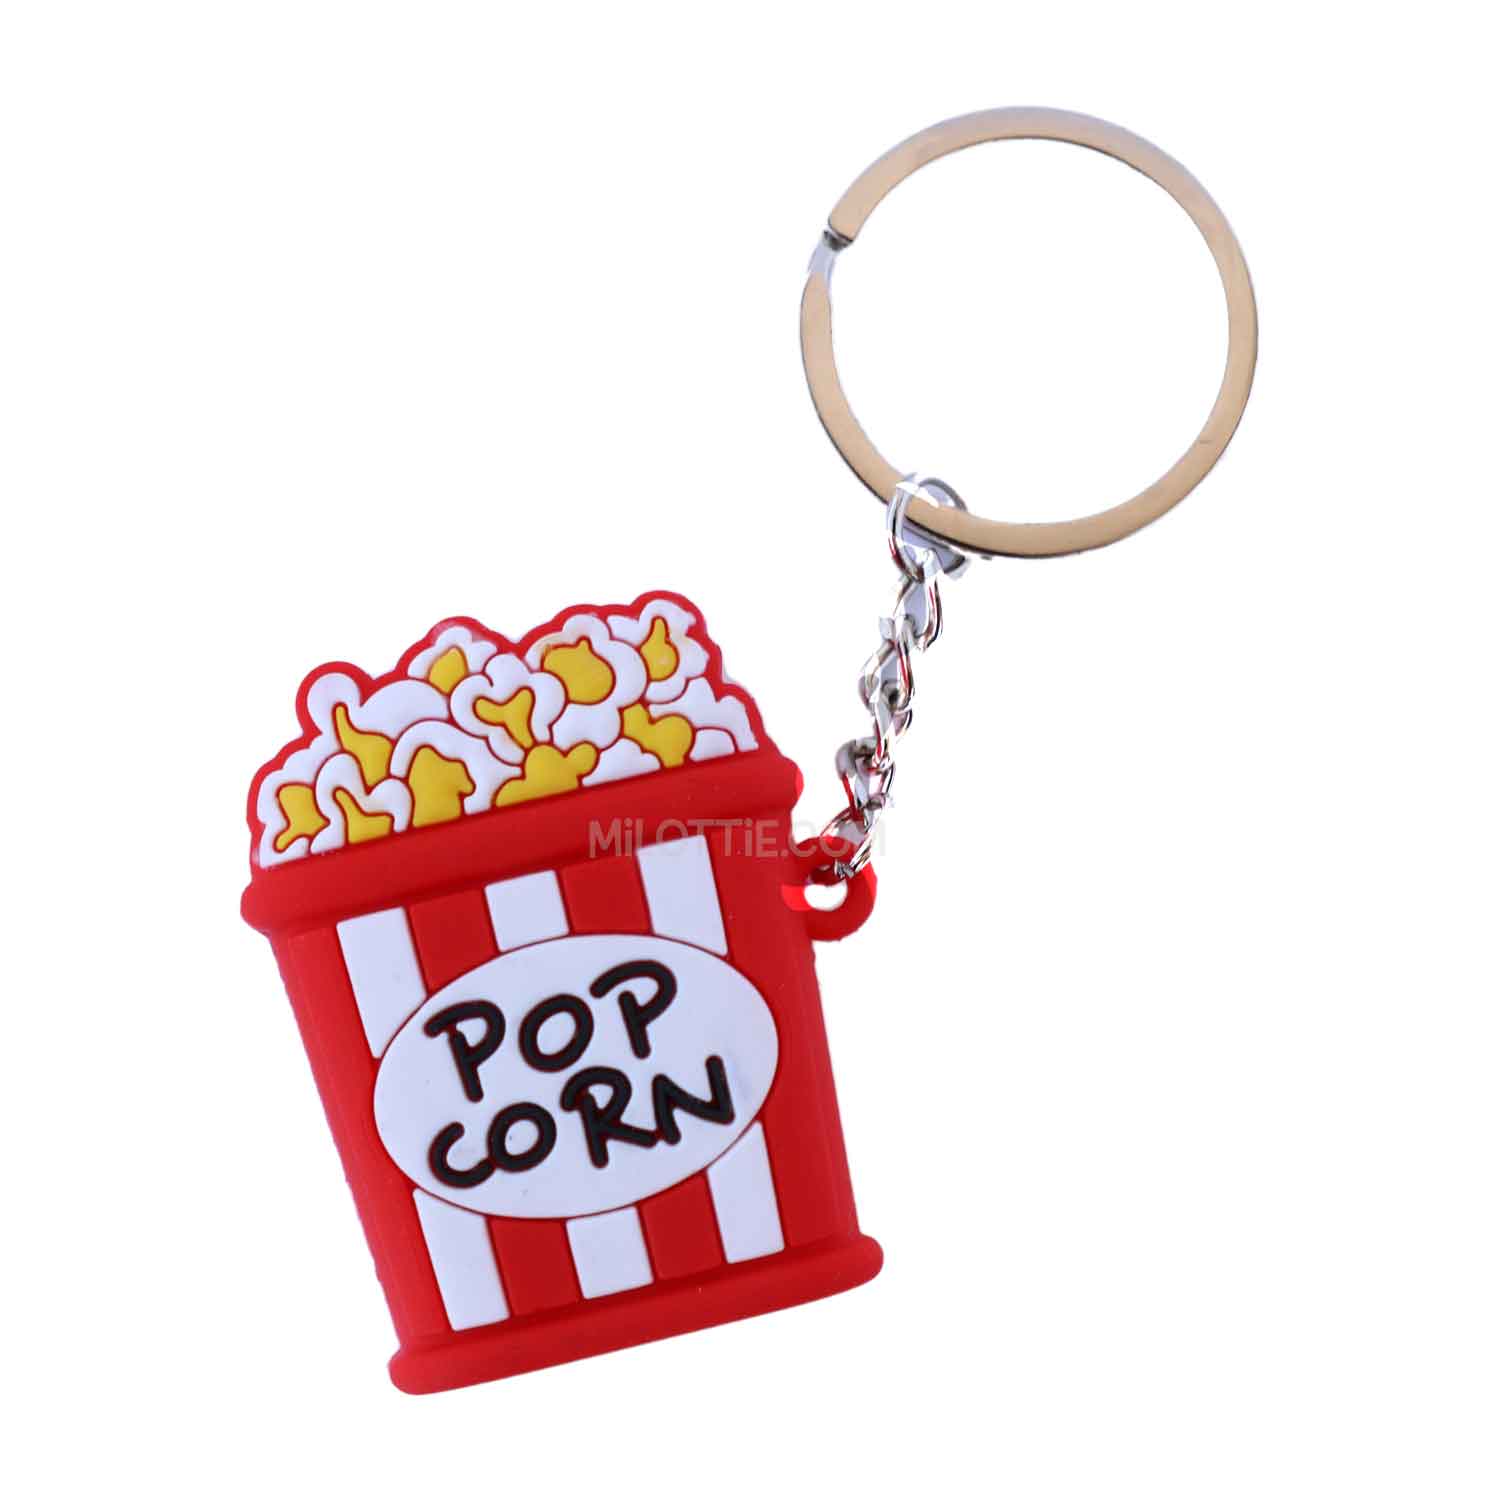 Popcorn Key Chain